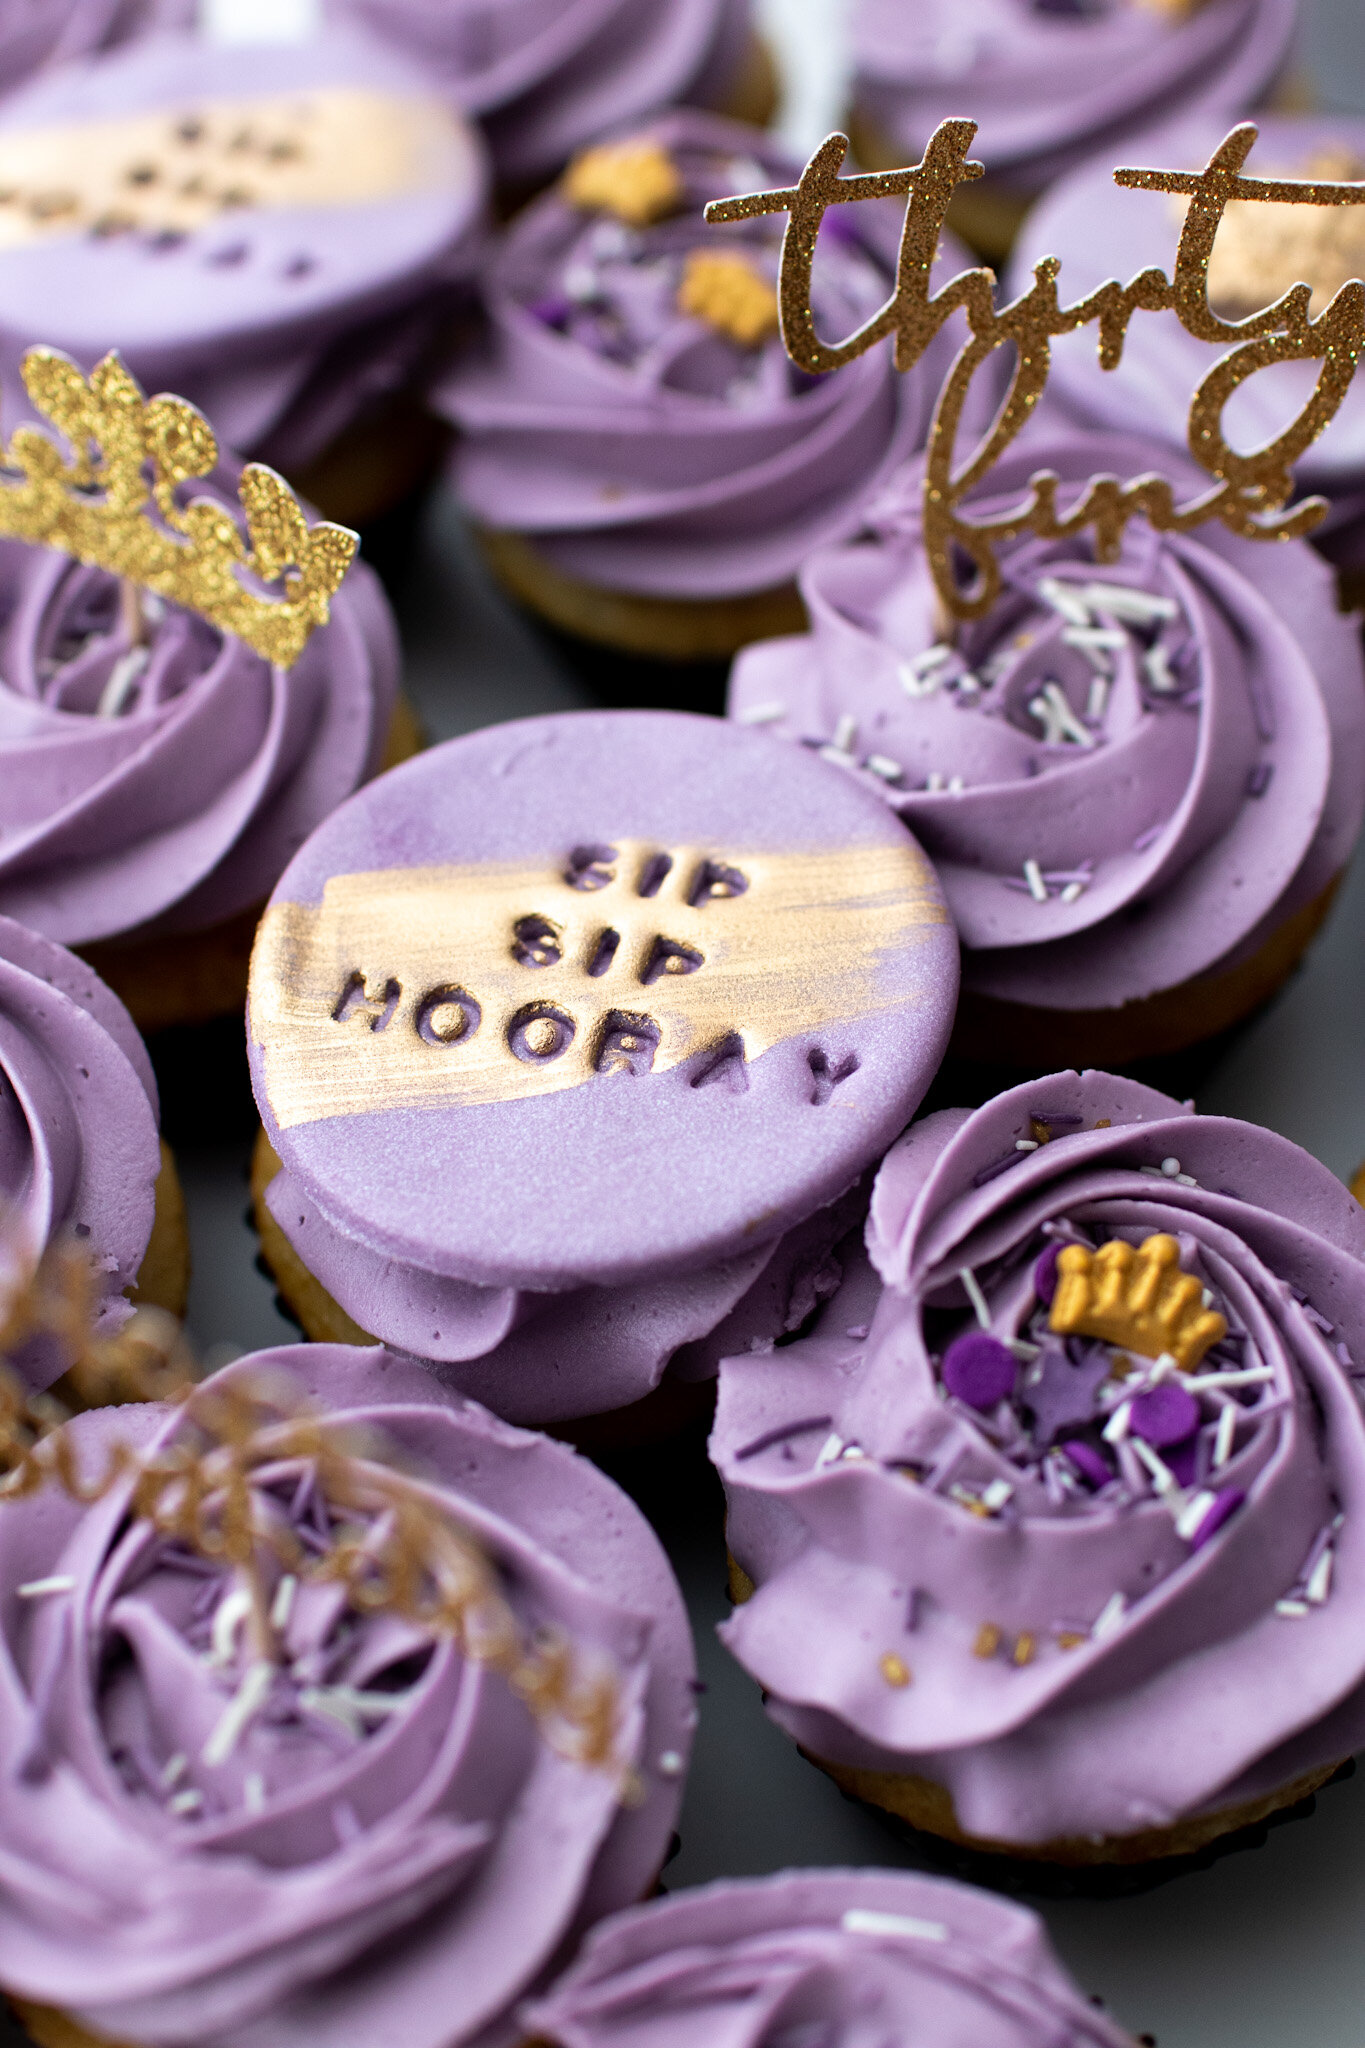 Sip Sip Hooray Birthday Cupcakes